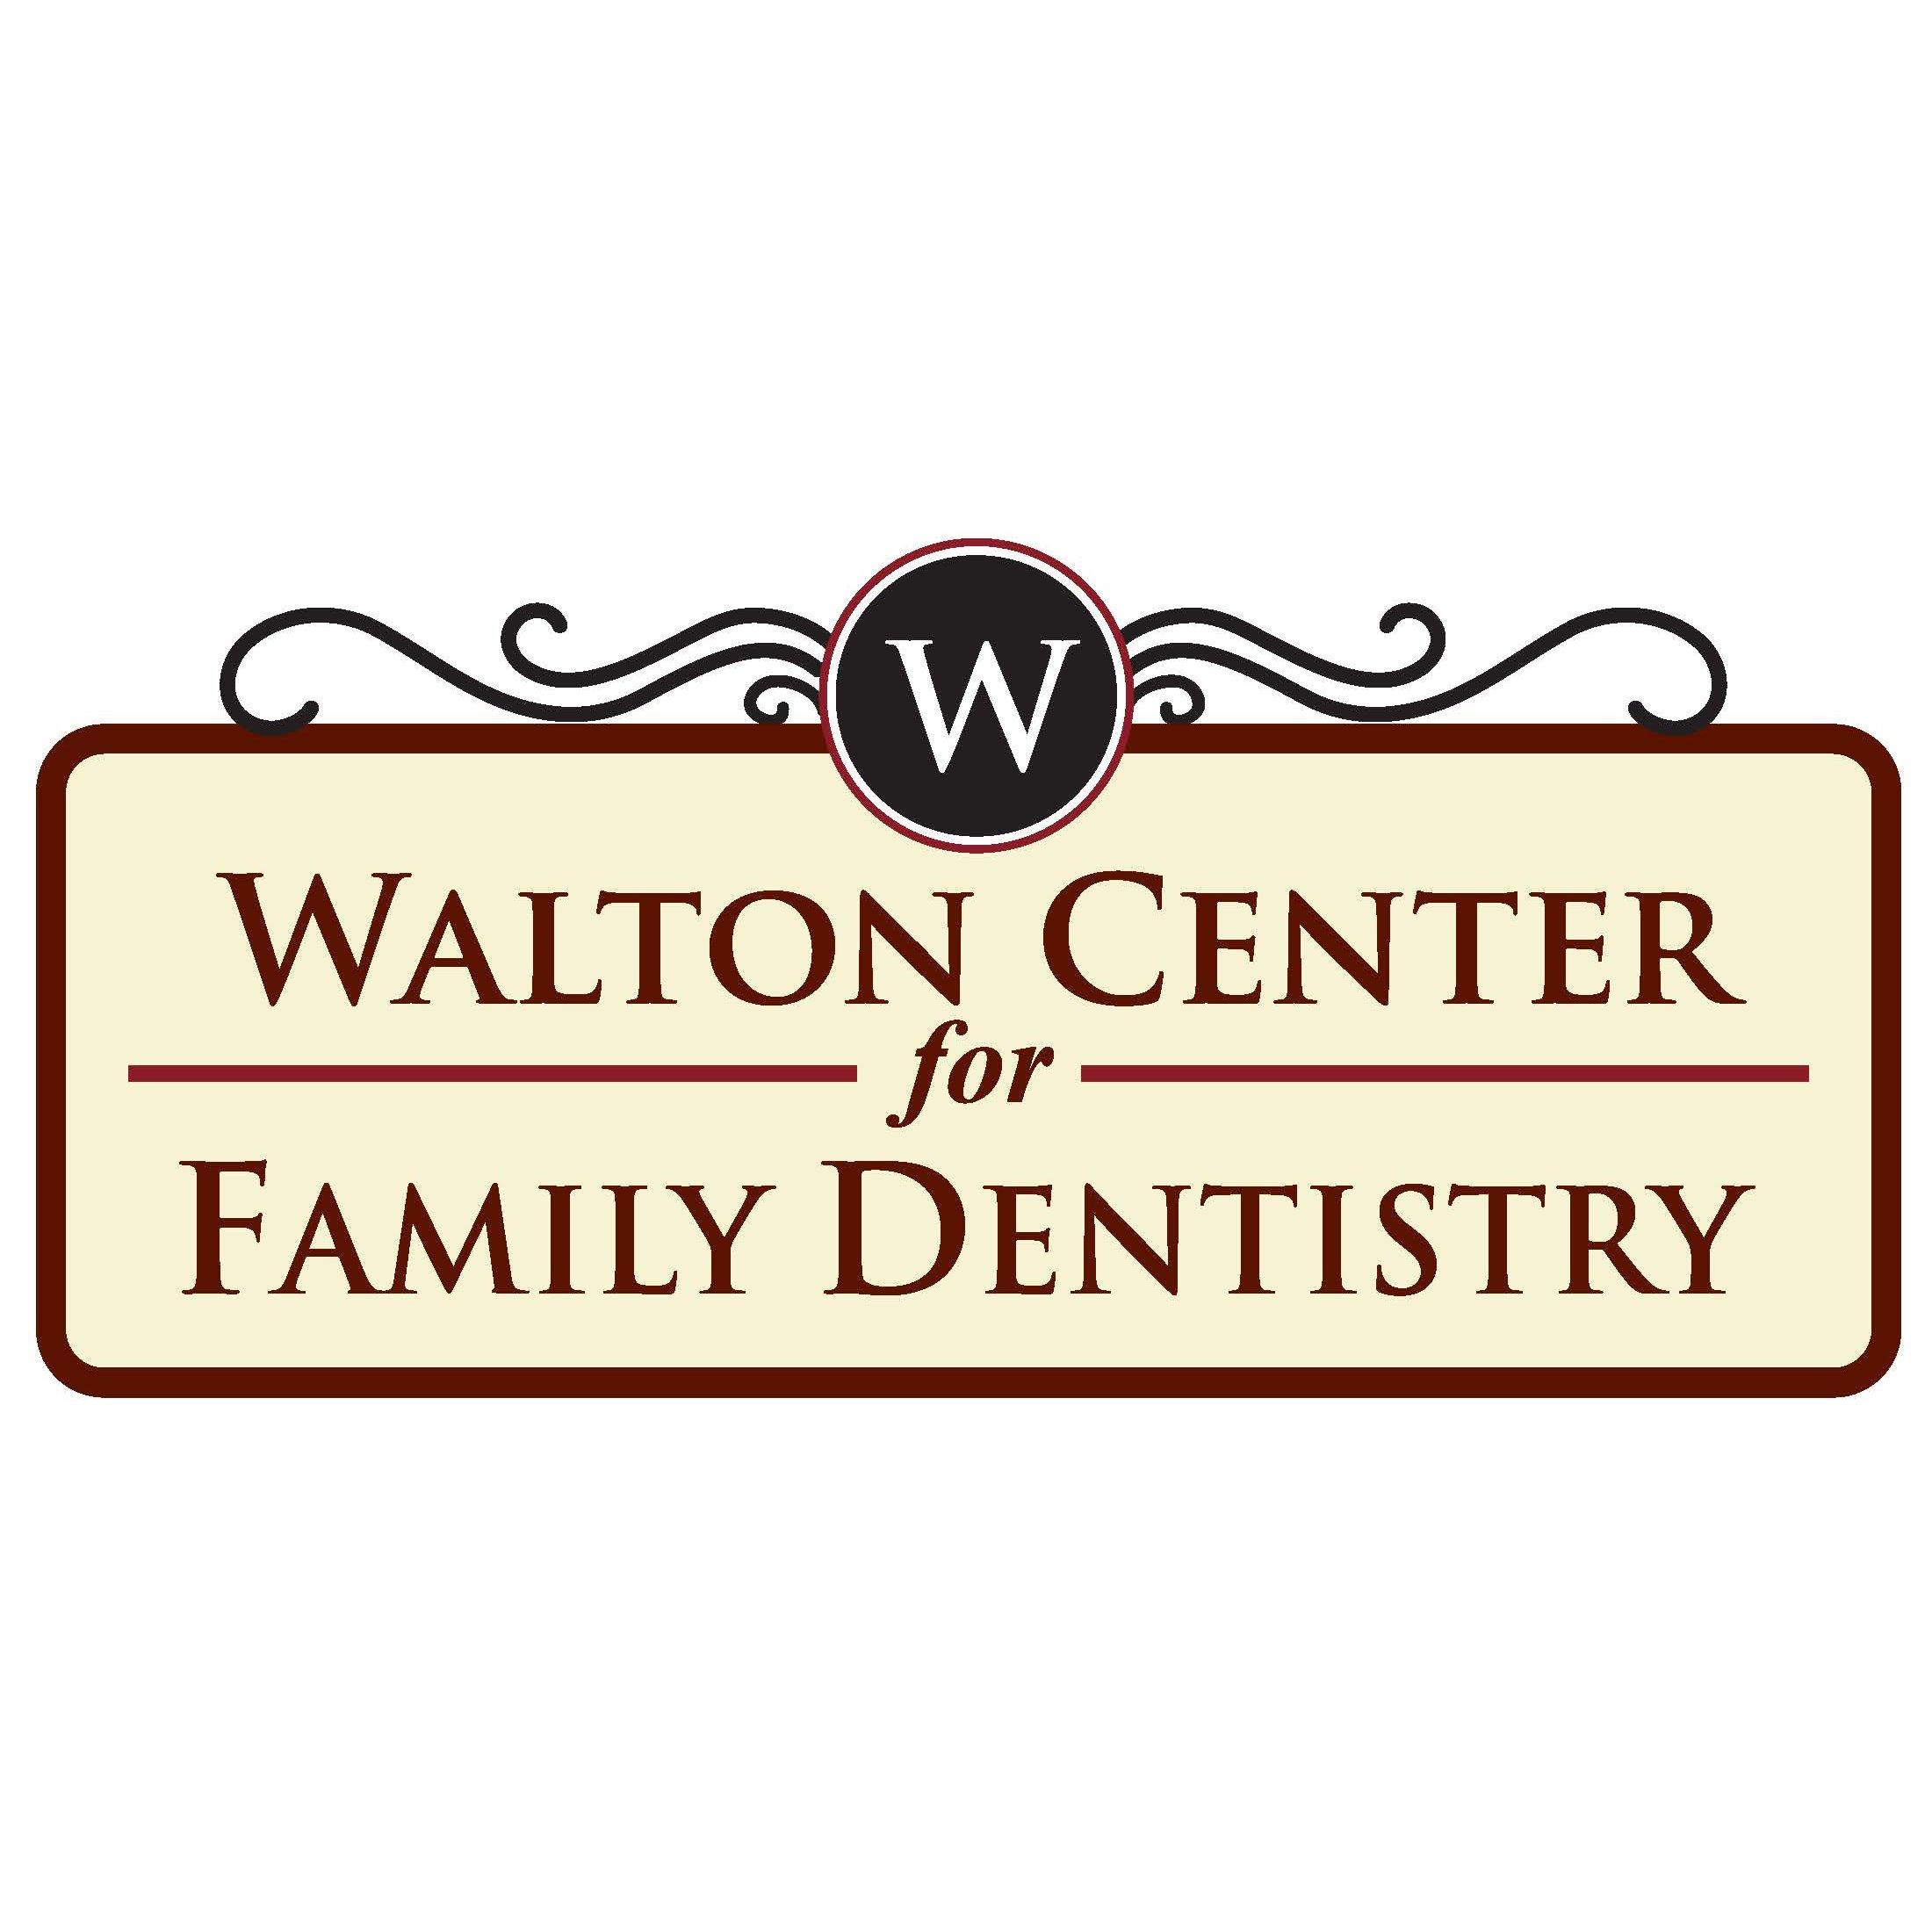 Walton Center for Family Dentistry